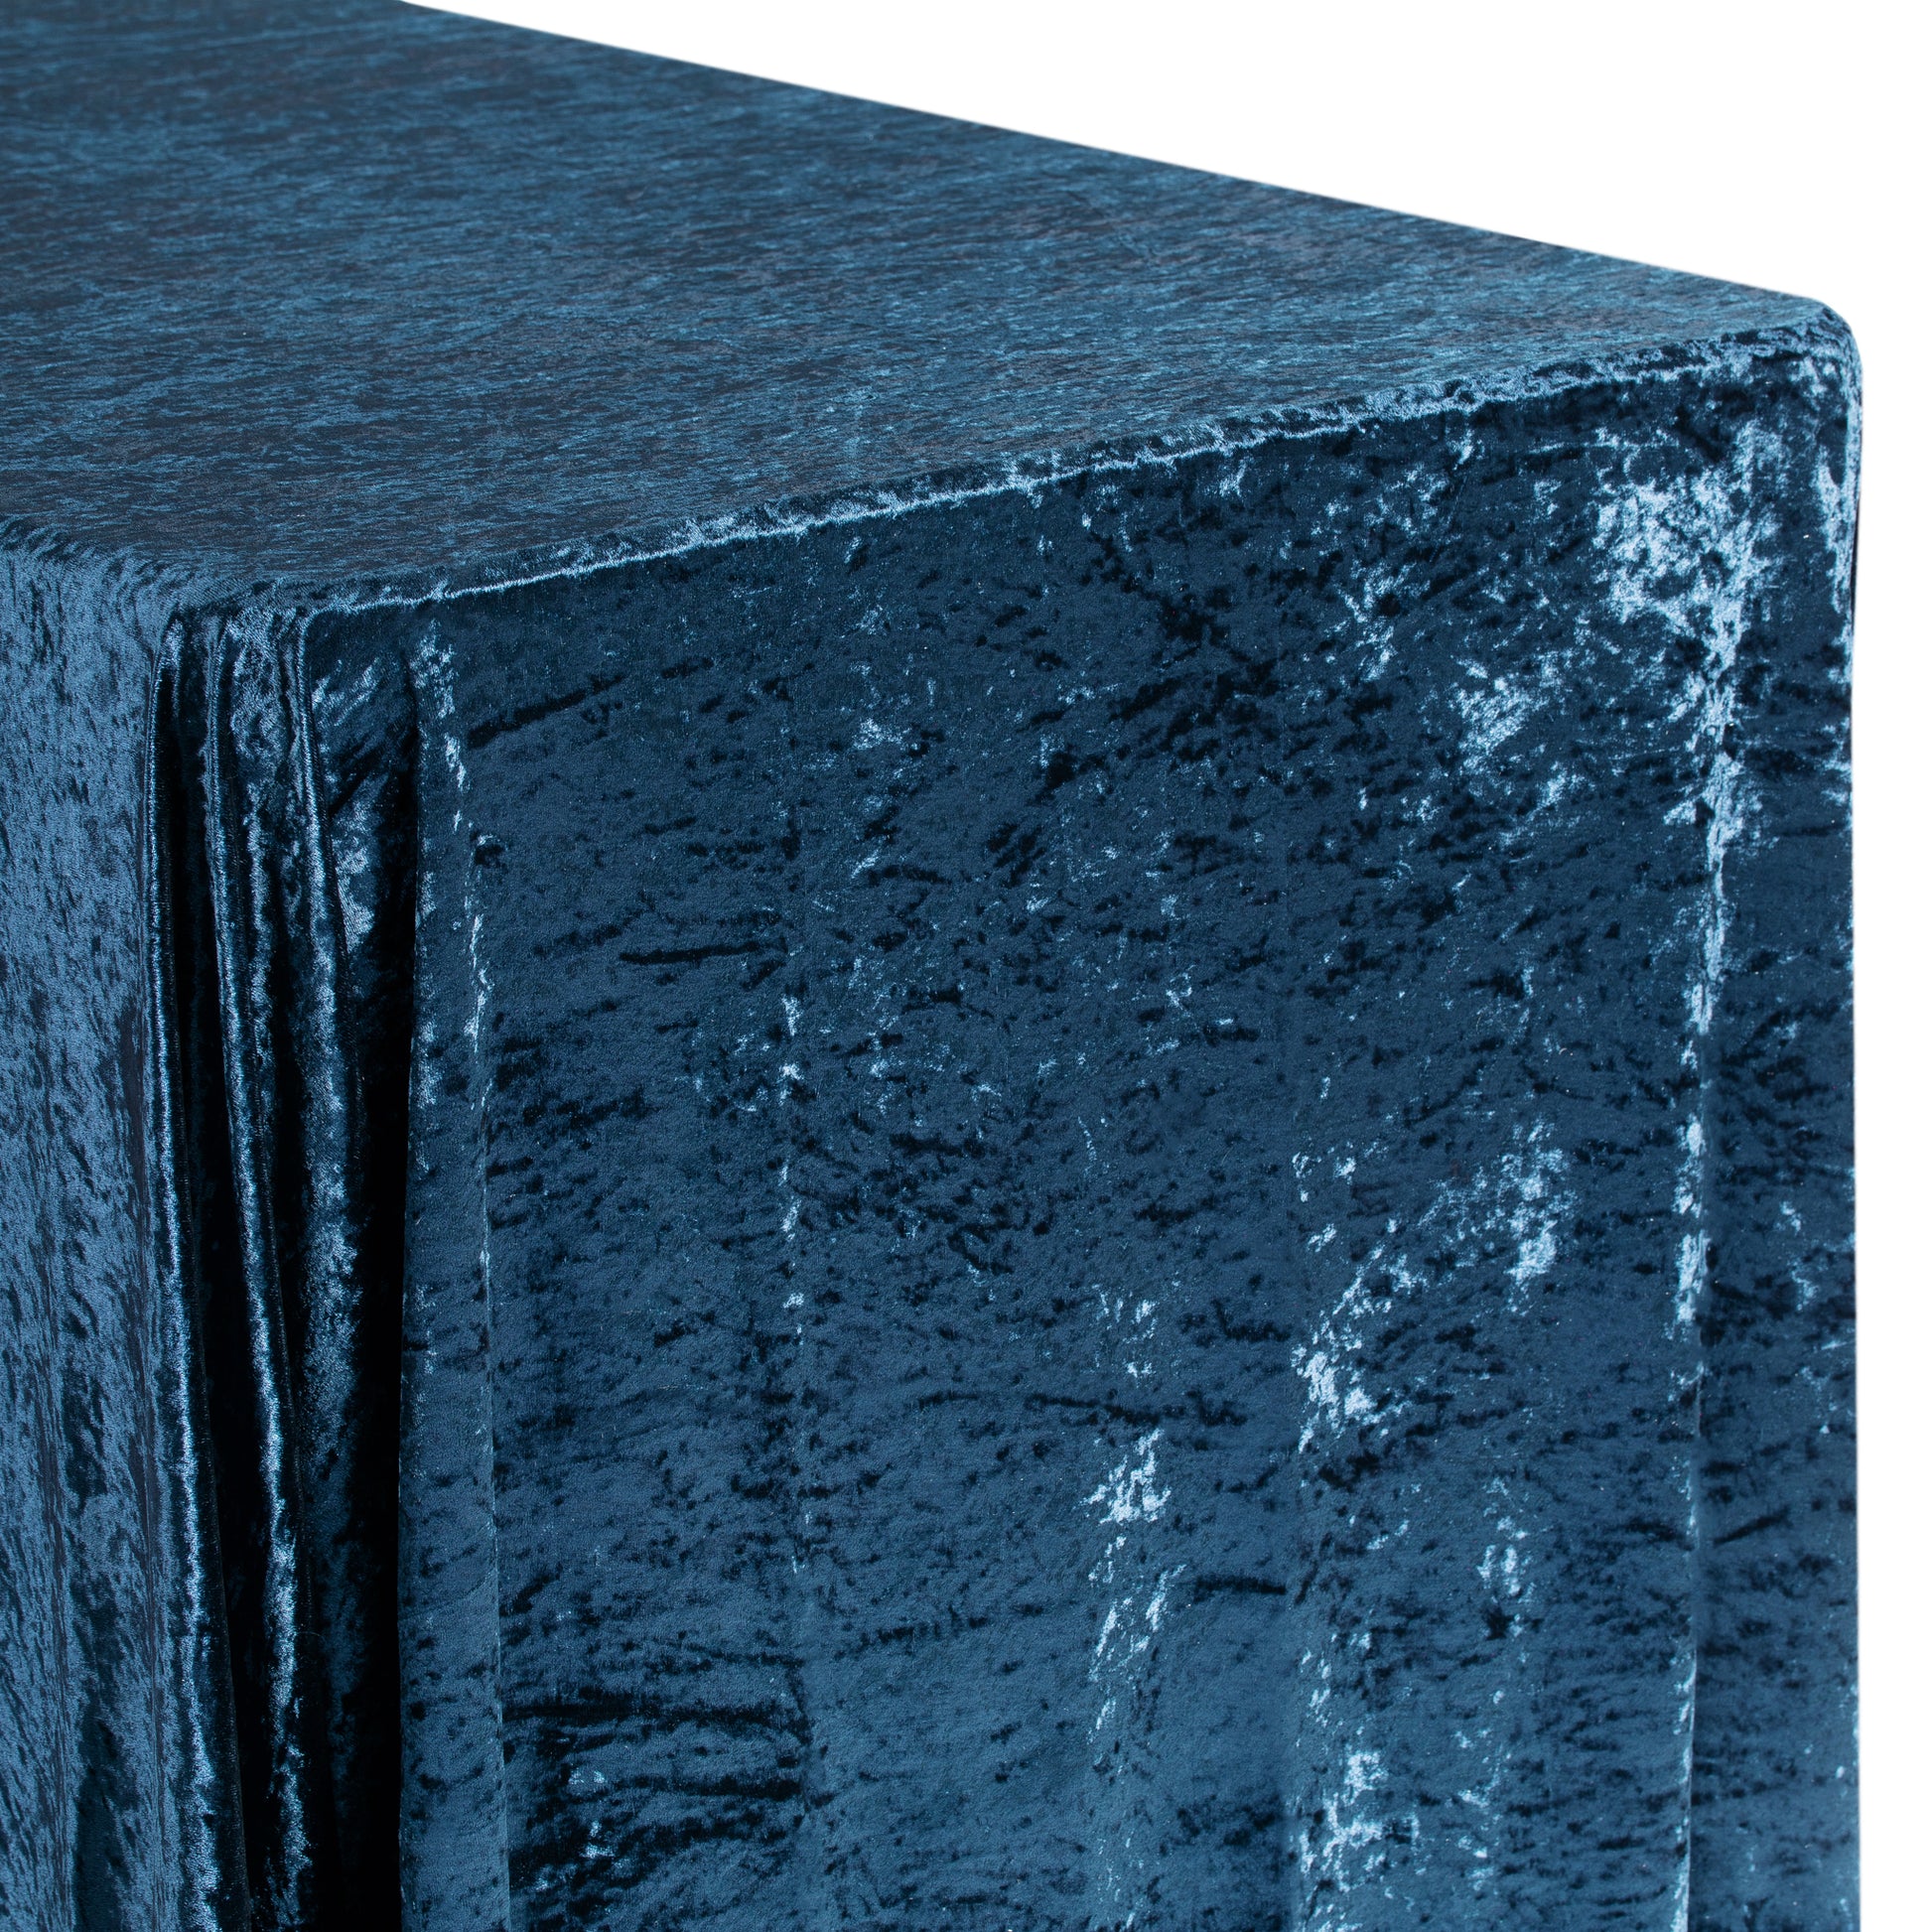 Velvet 90"x132" Rectangular Tablecloth - Navy Blue - CV Linens